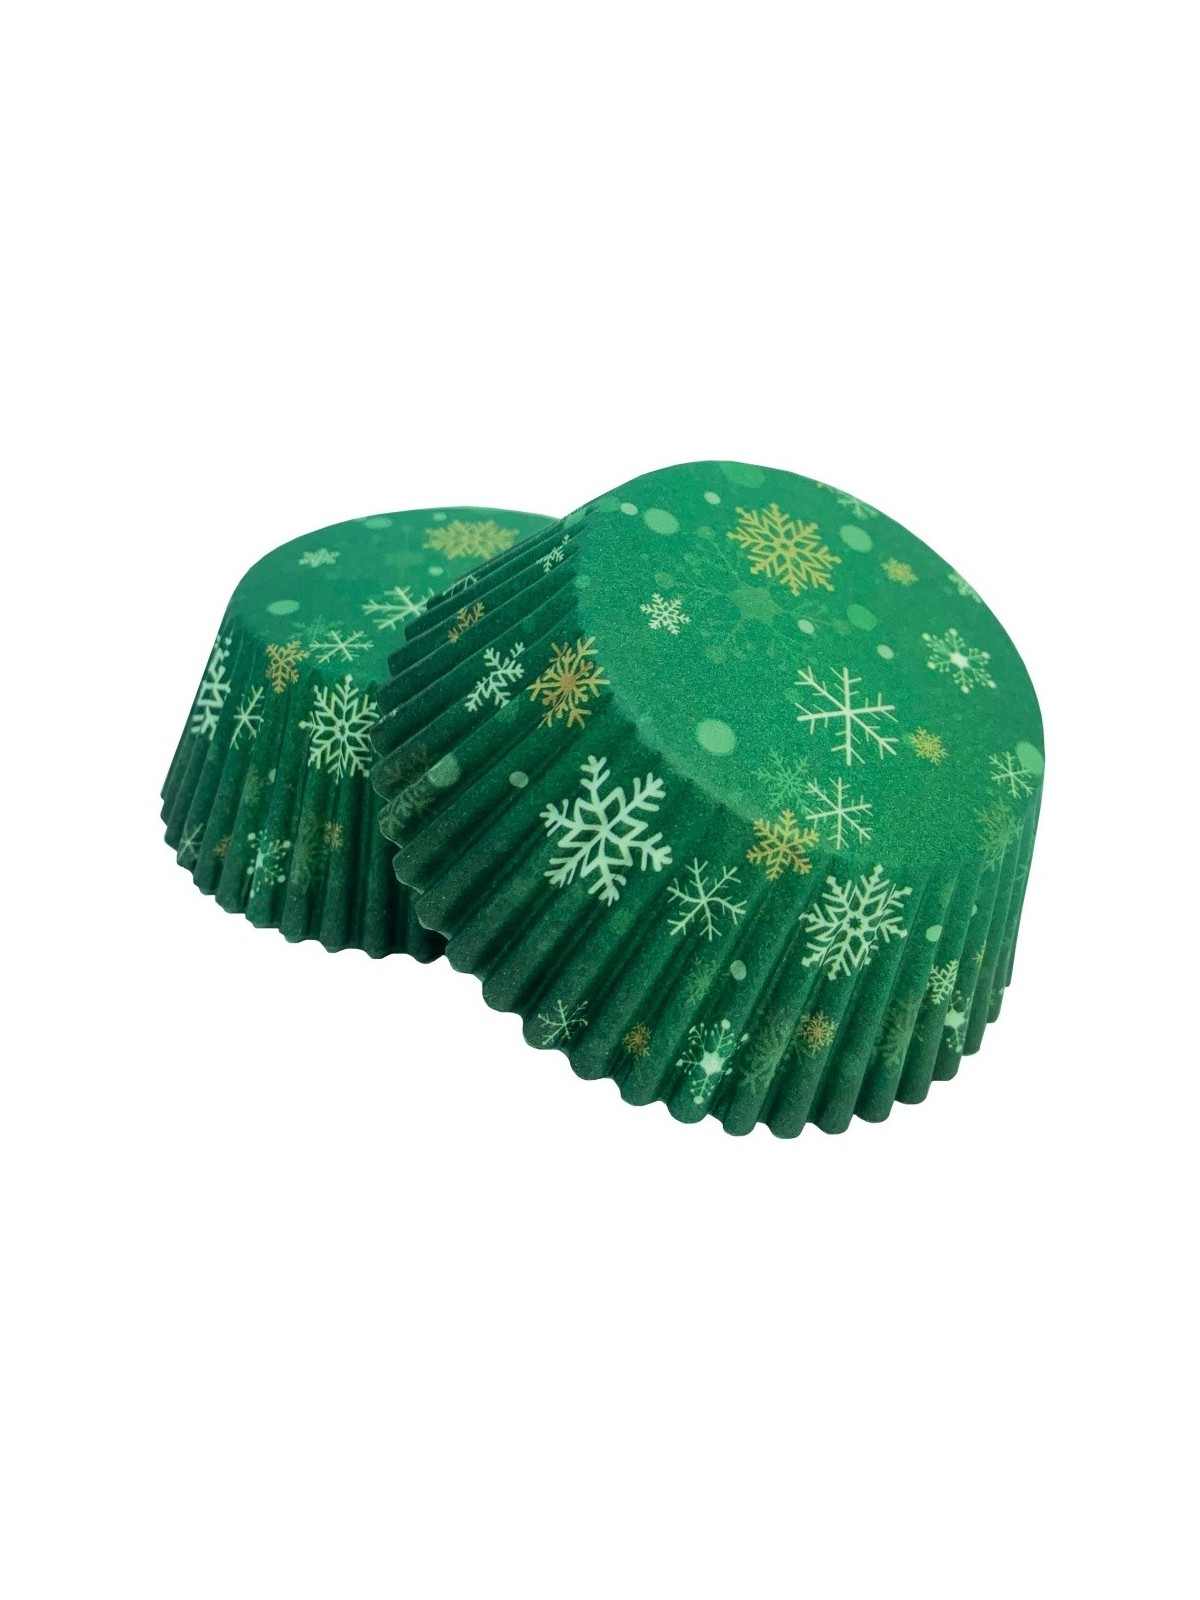 Baking cups - green - snowflakes - 50 pcs